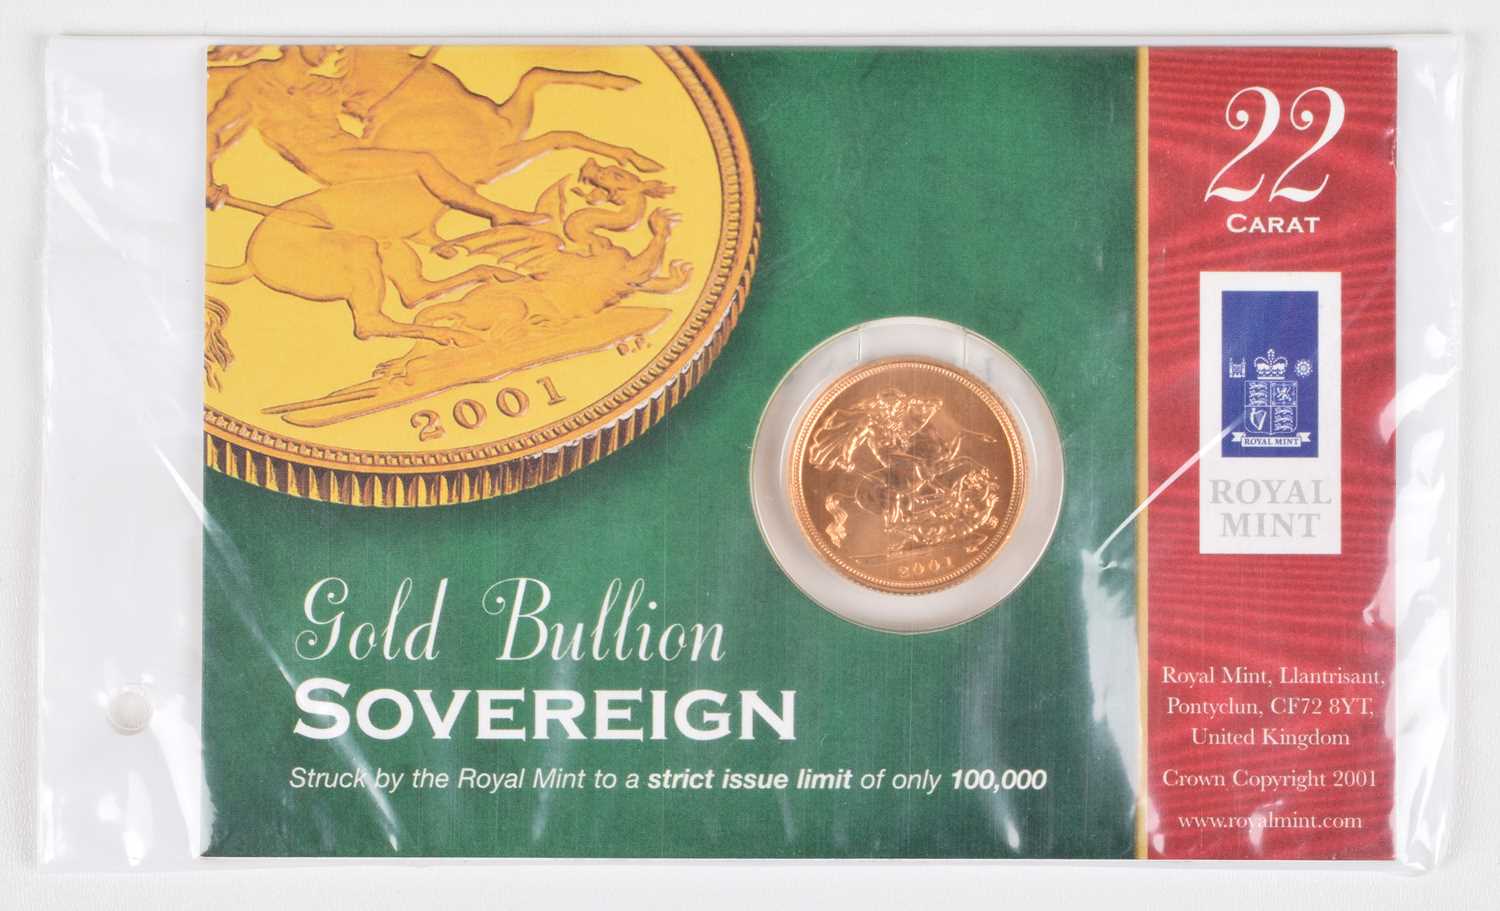 Lot 67 - Elizabeth II, Gold Bullion Sovereign, 2001, Royal Mint.